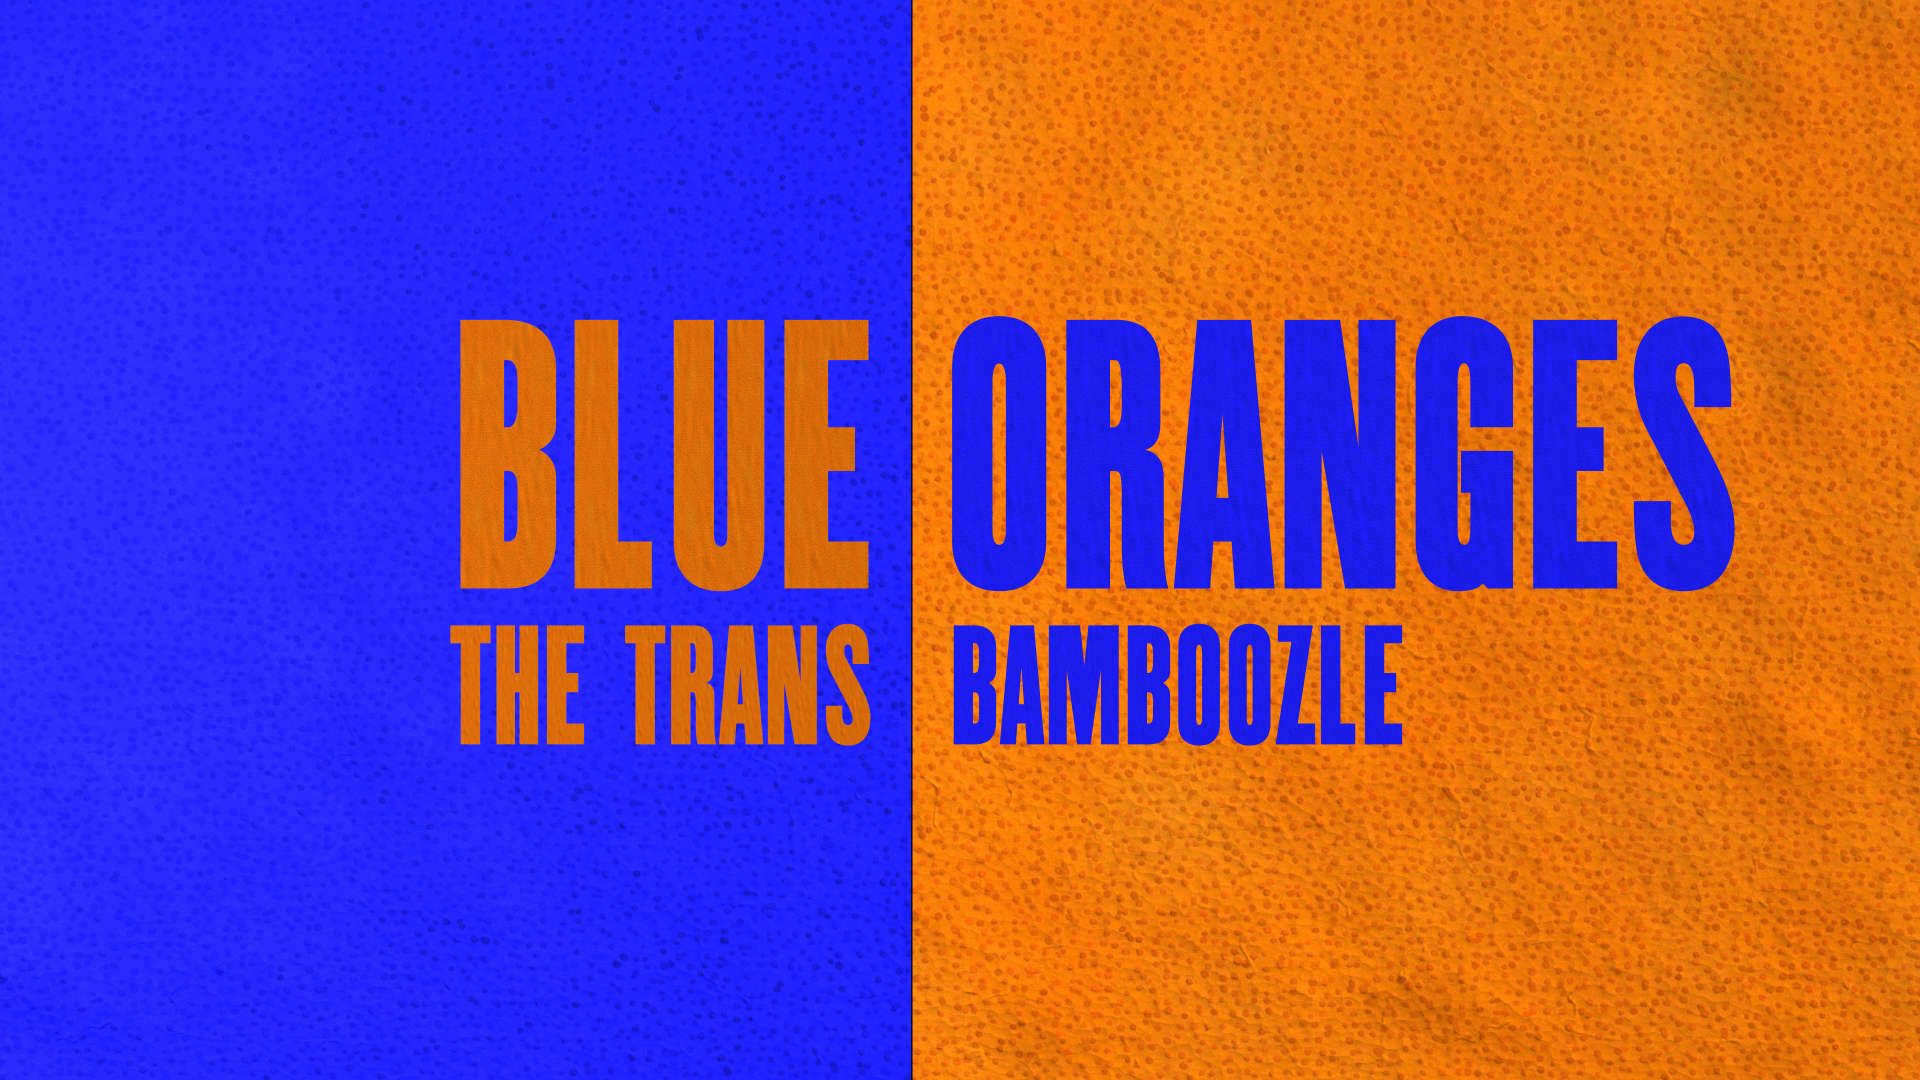 Blue Oranges: The Trans Bamboozle